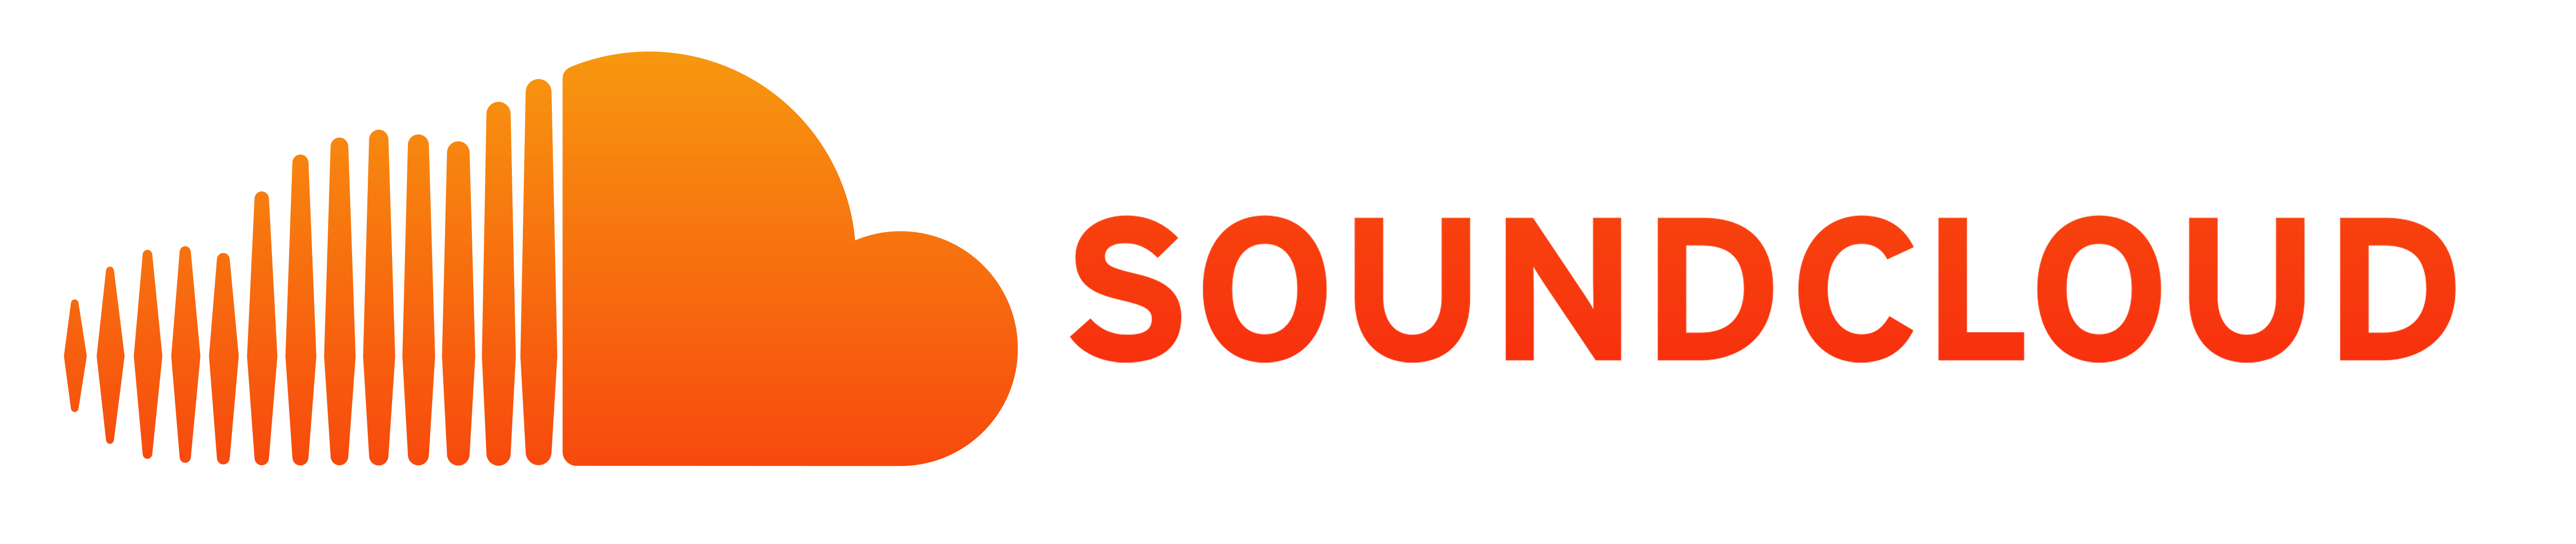 Image result for Sound cloud